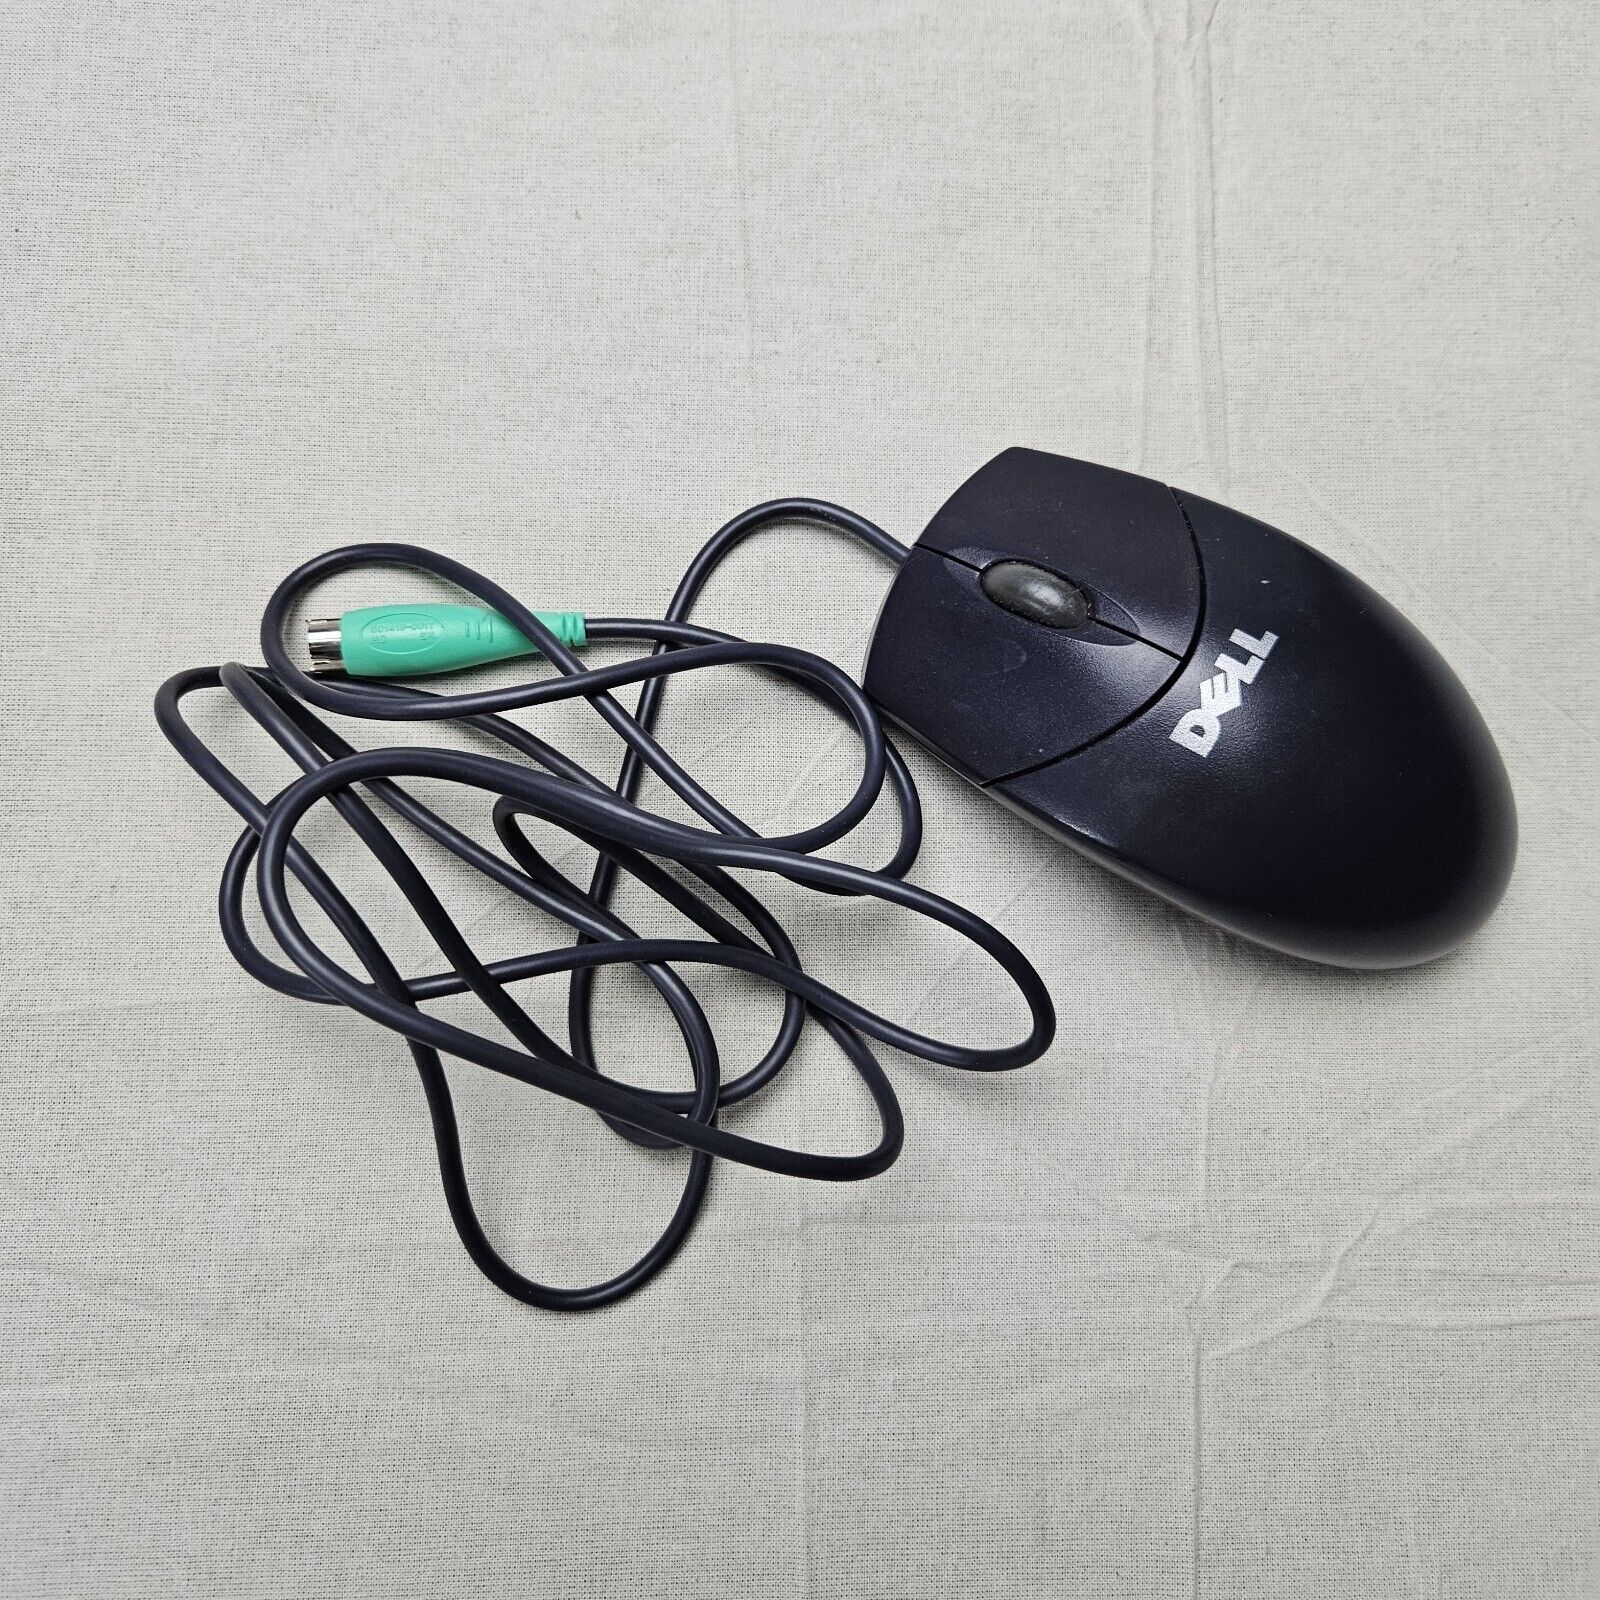 VTG Dell Logitec M-369 PS/2 Wired Ball Mouse Retro Black